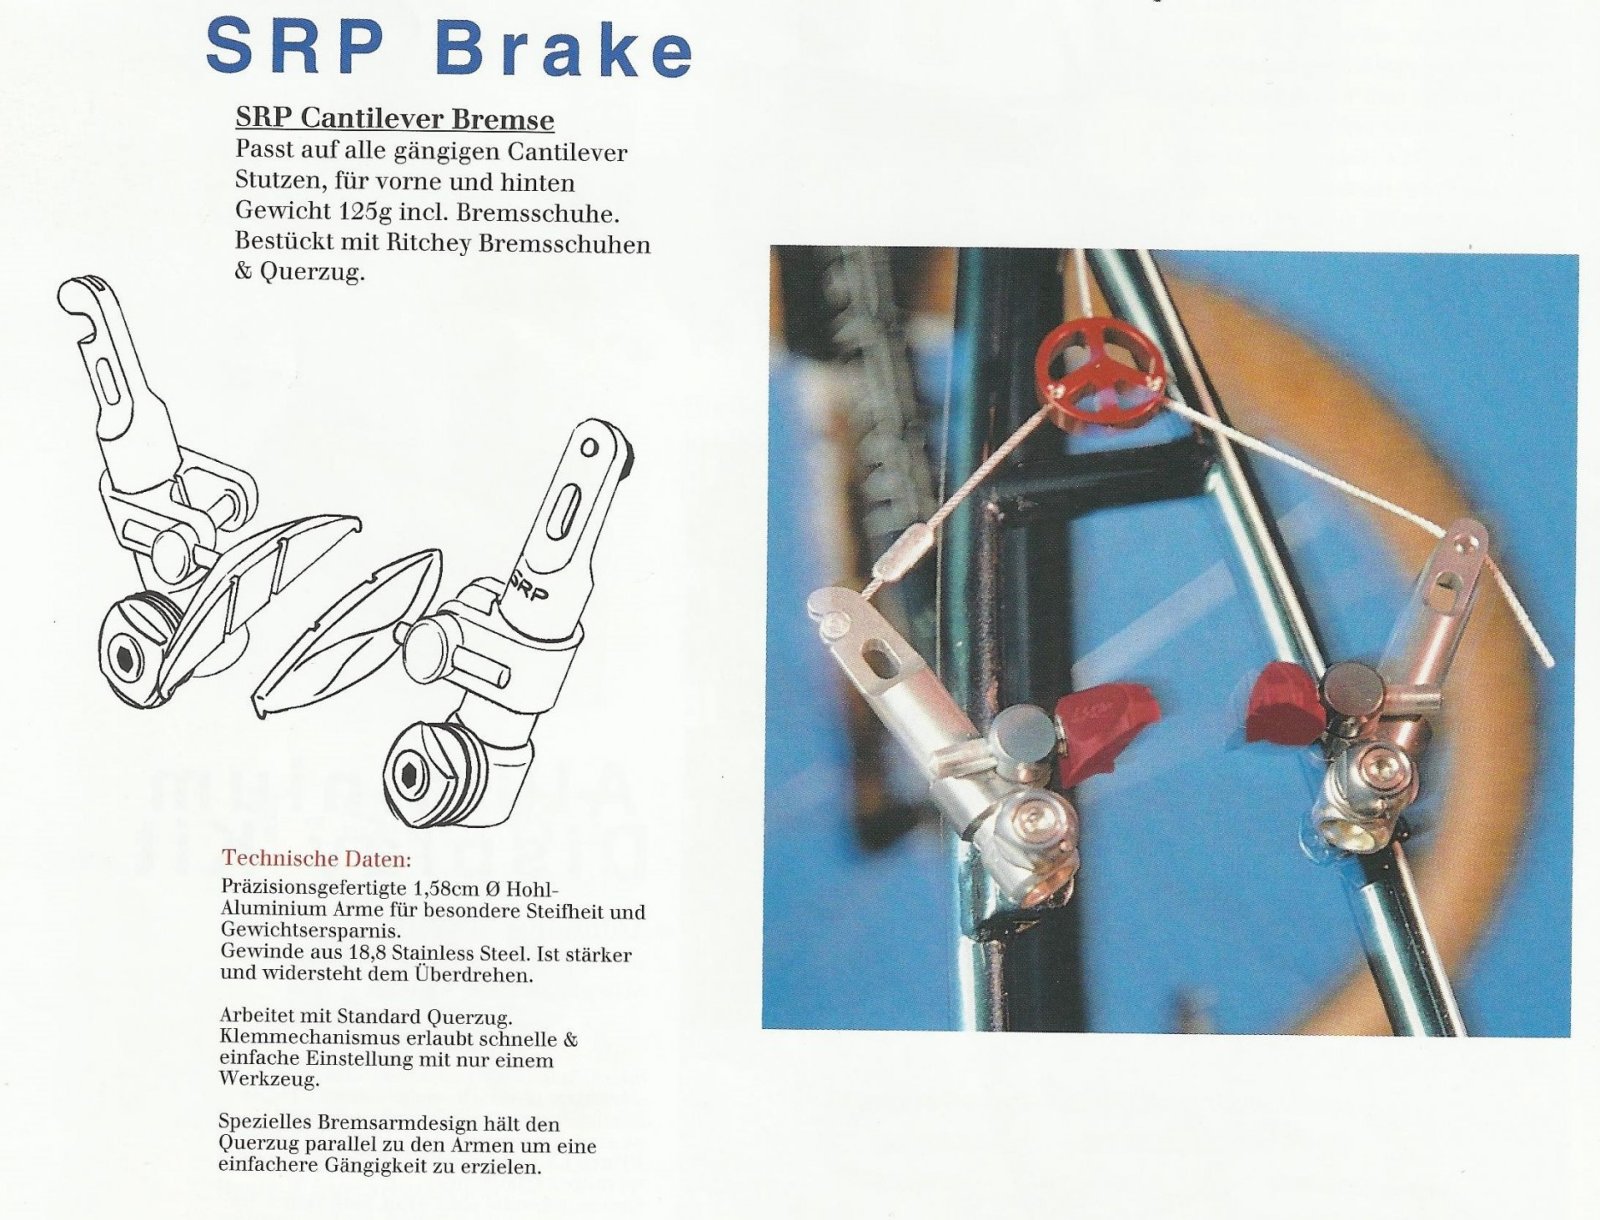 SRP Titanium Cantilever Brakes aus Maxxximum 1995 Katalog.jpg